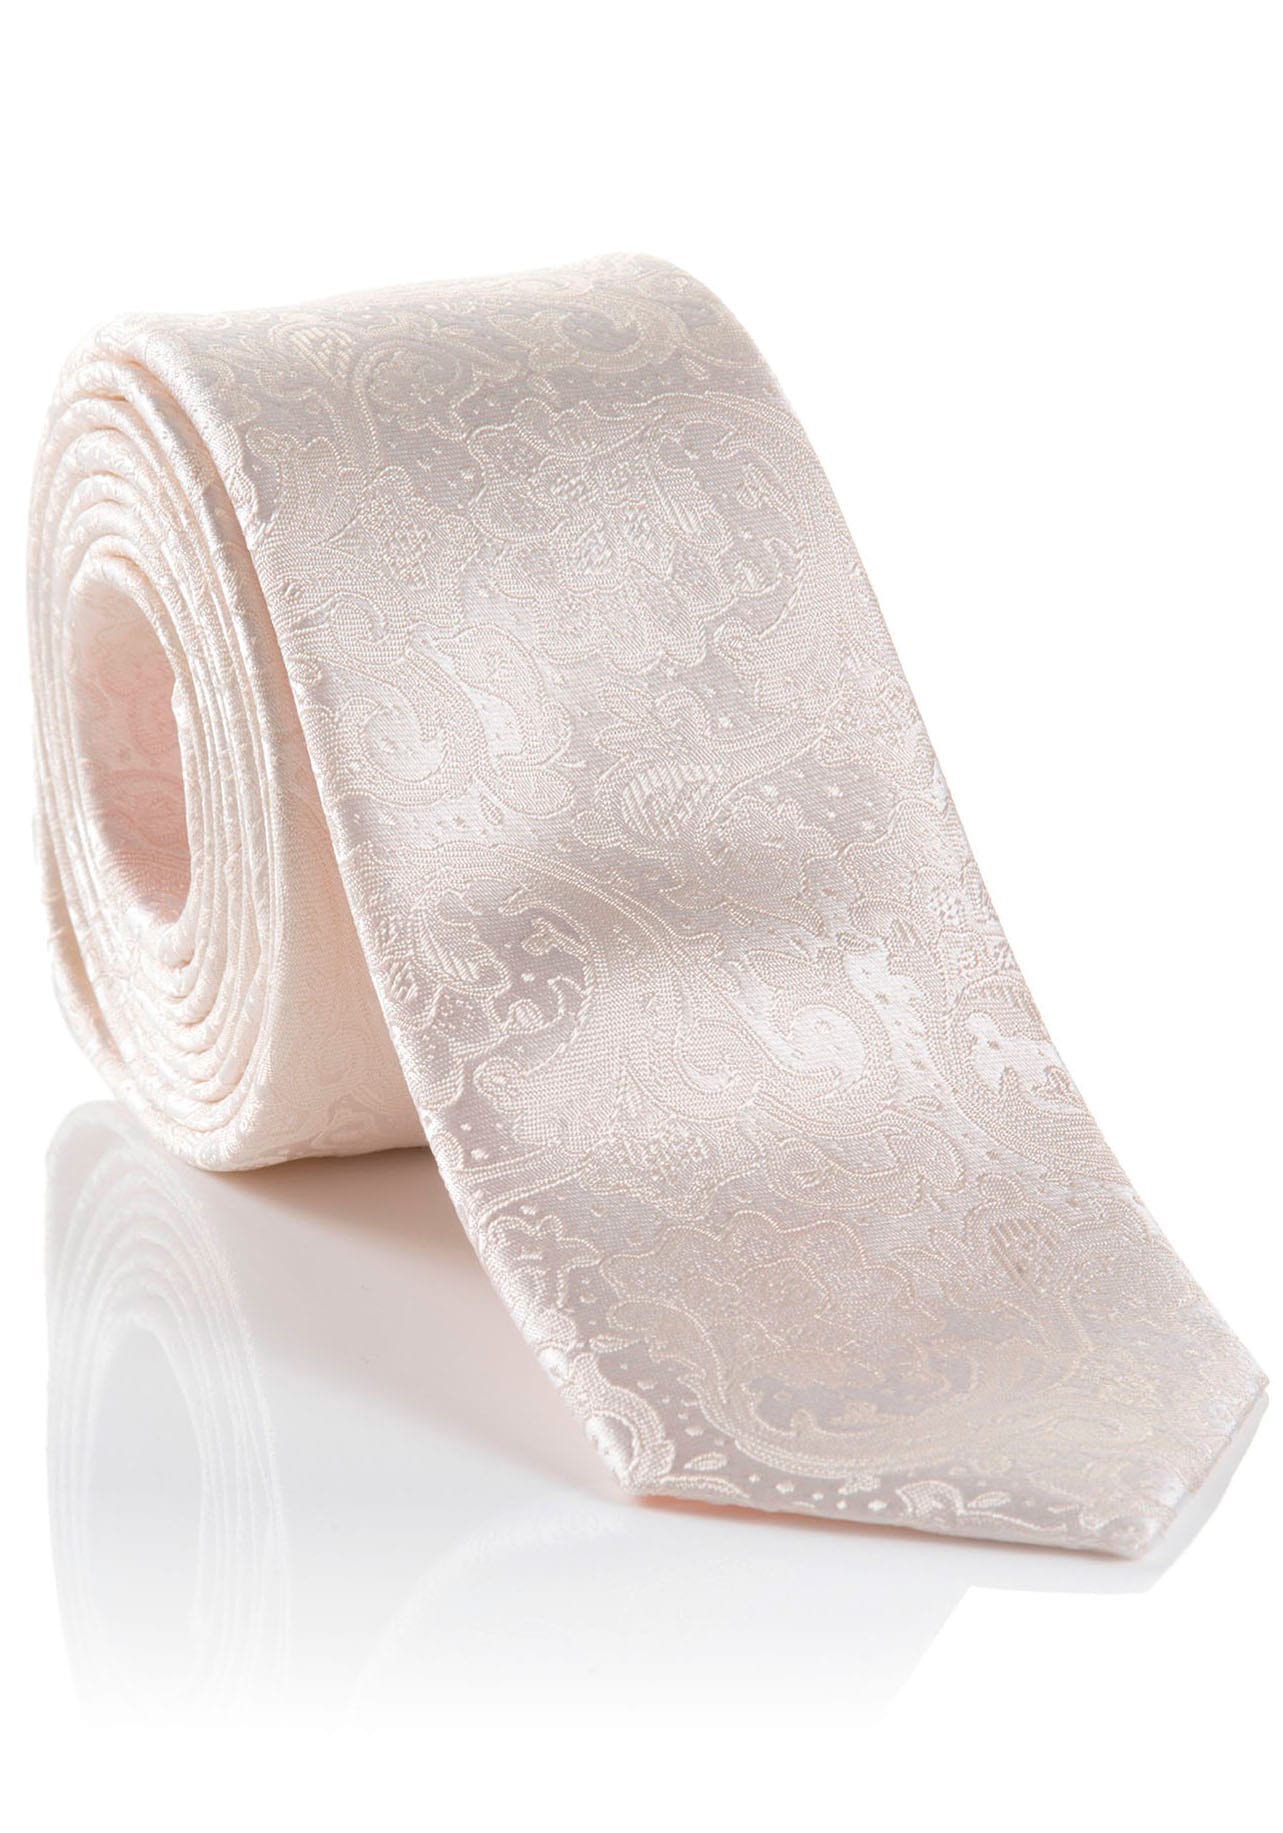 MONTI Krawatte »LELIO«, Krawatte aus reiner online bestellen Paisley-Muster Seide